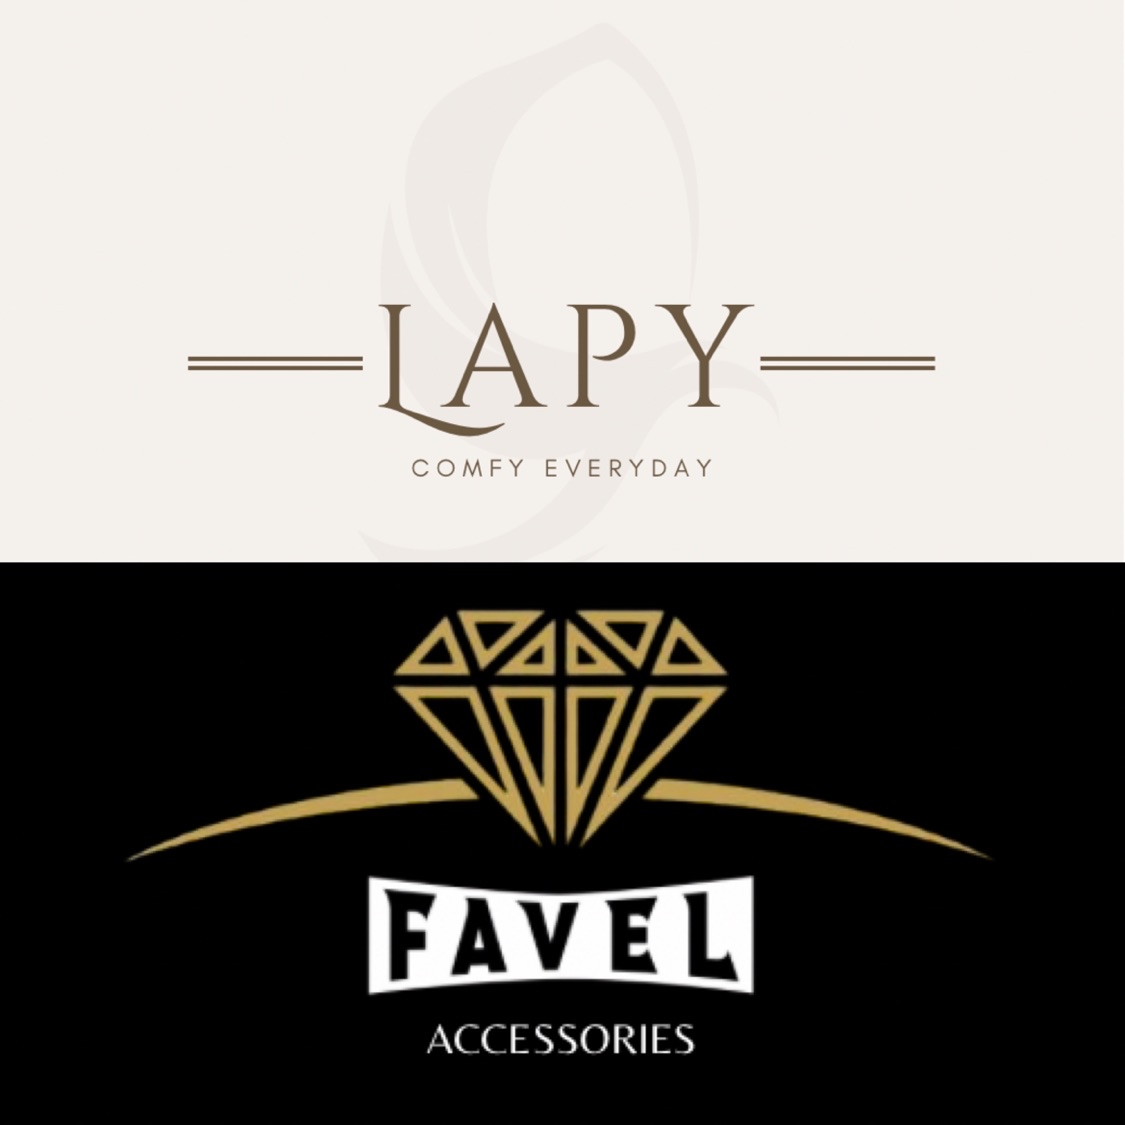 Produk lapy_favel | Shopee Indonesia